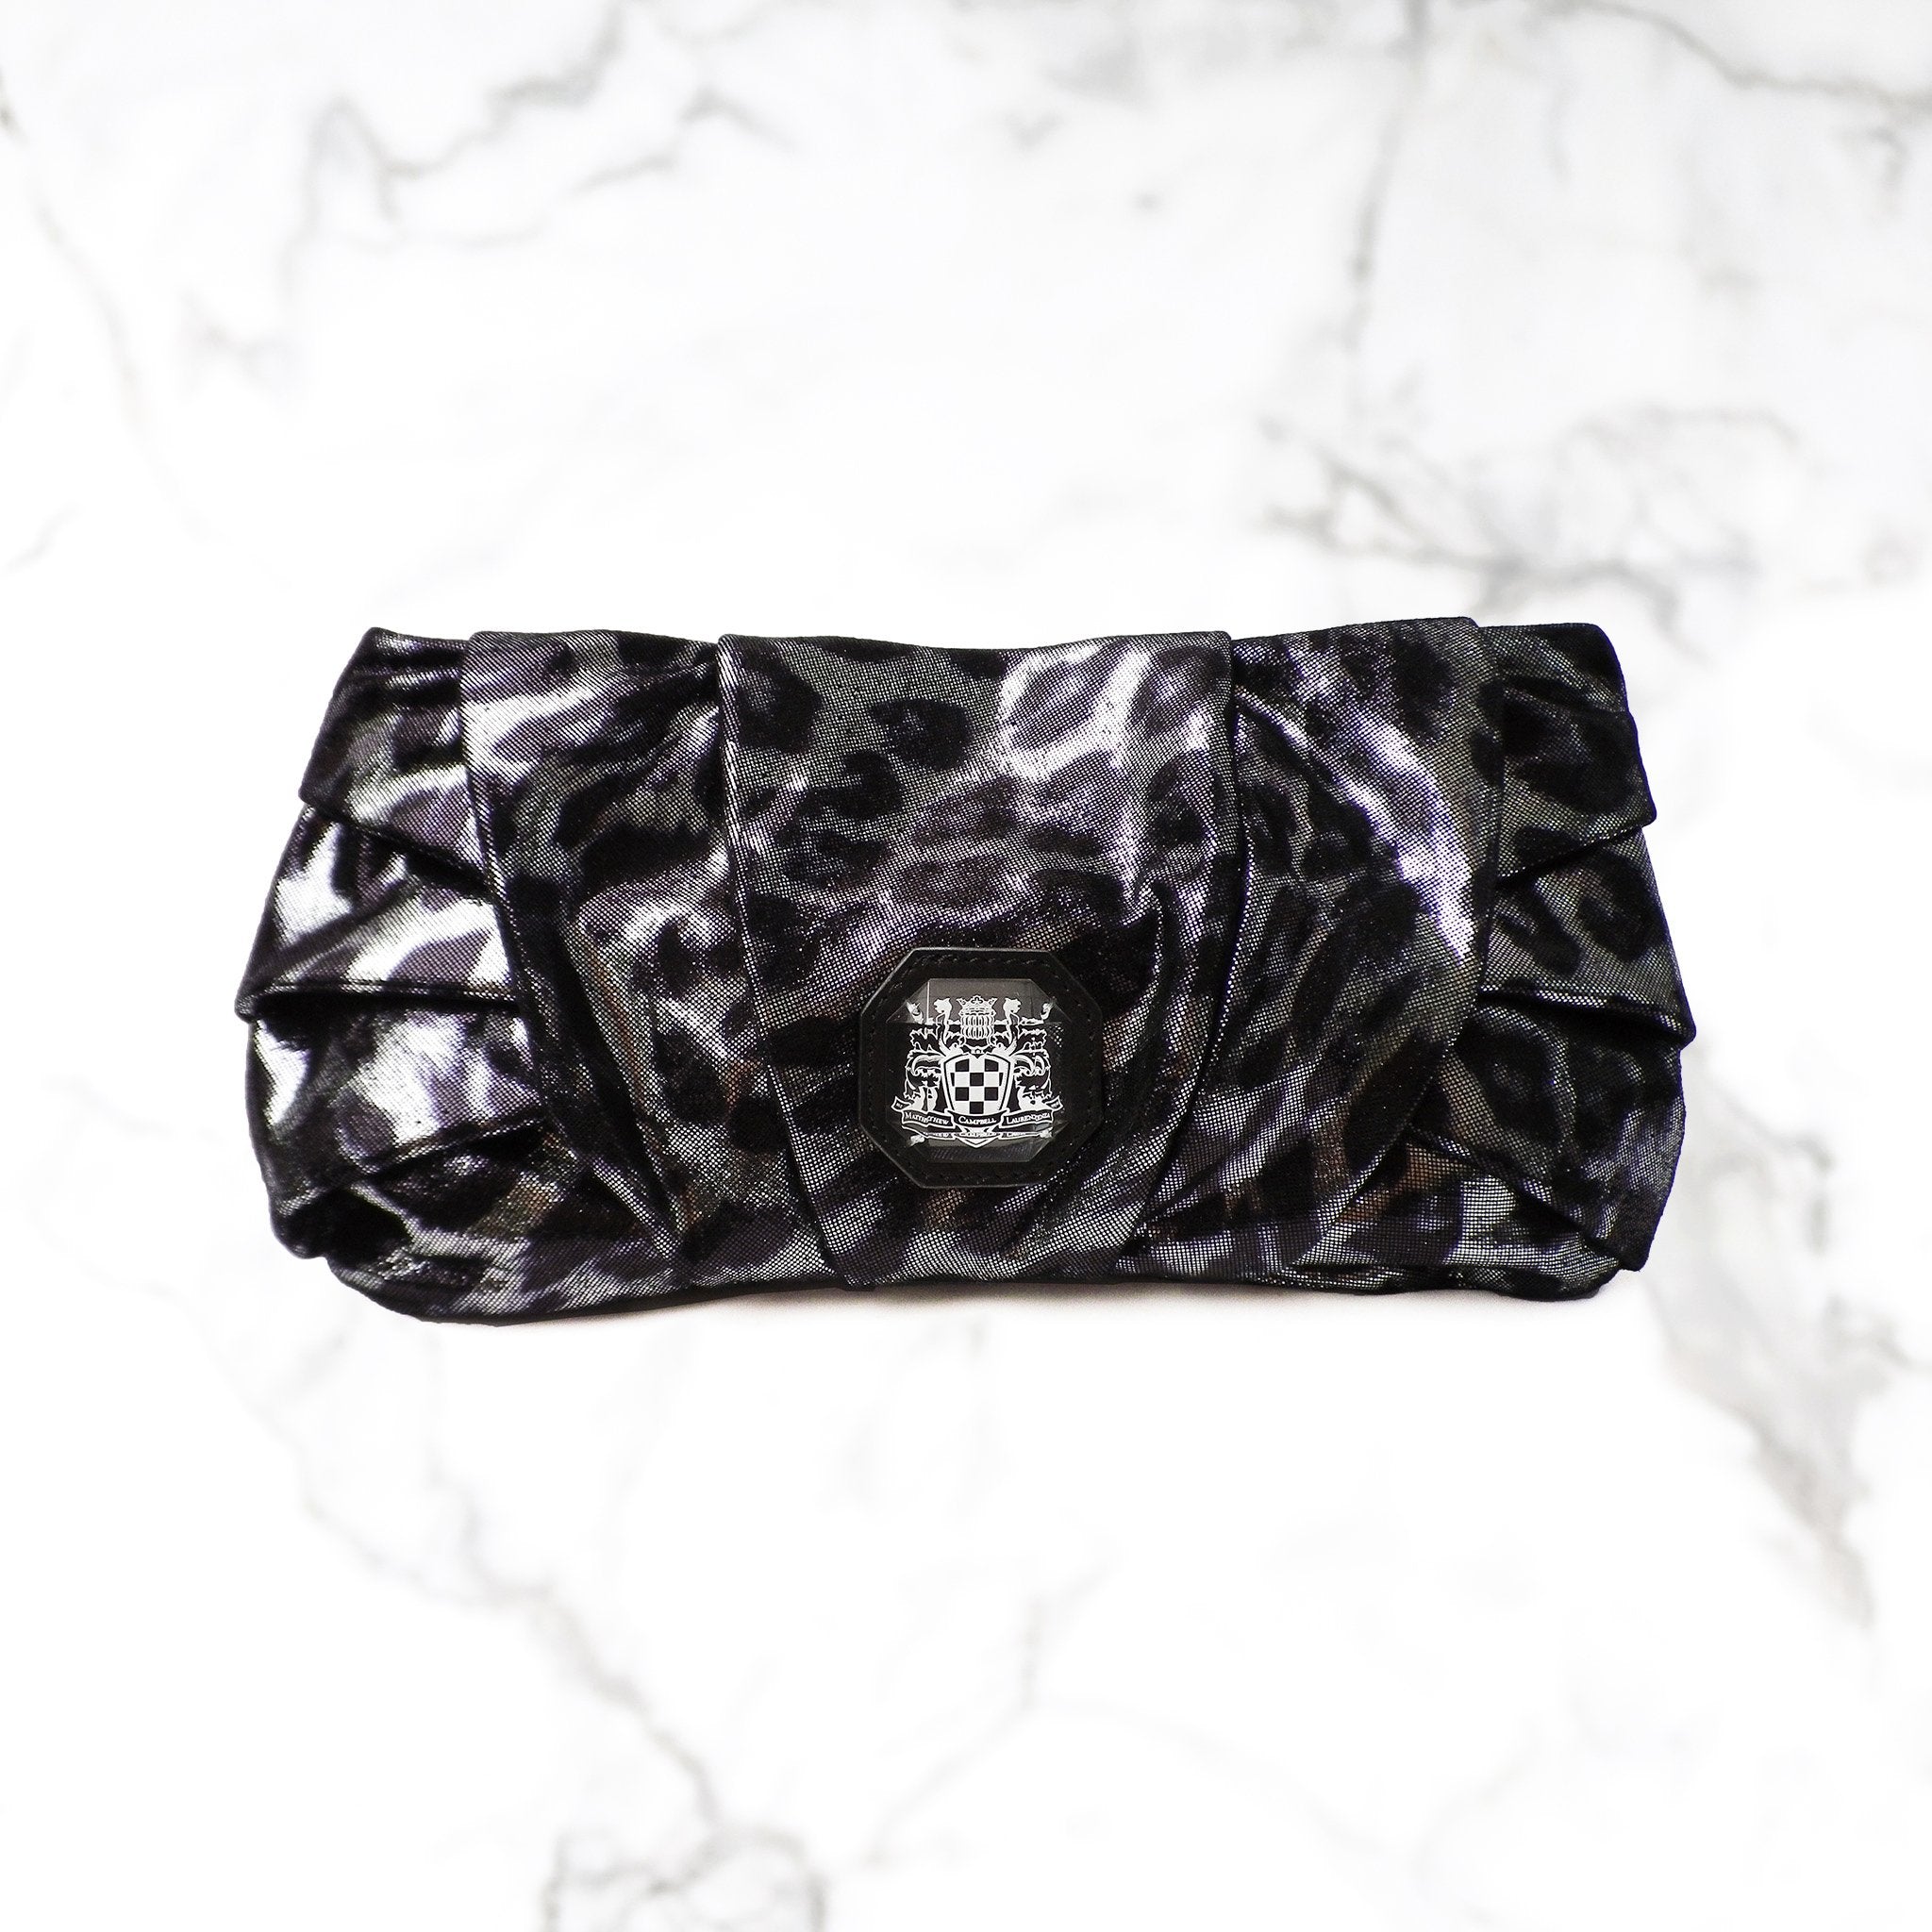 Vega black leopard handbag